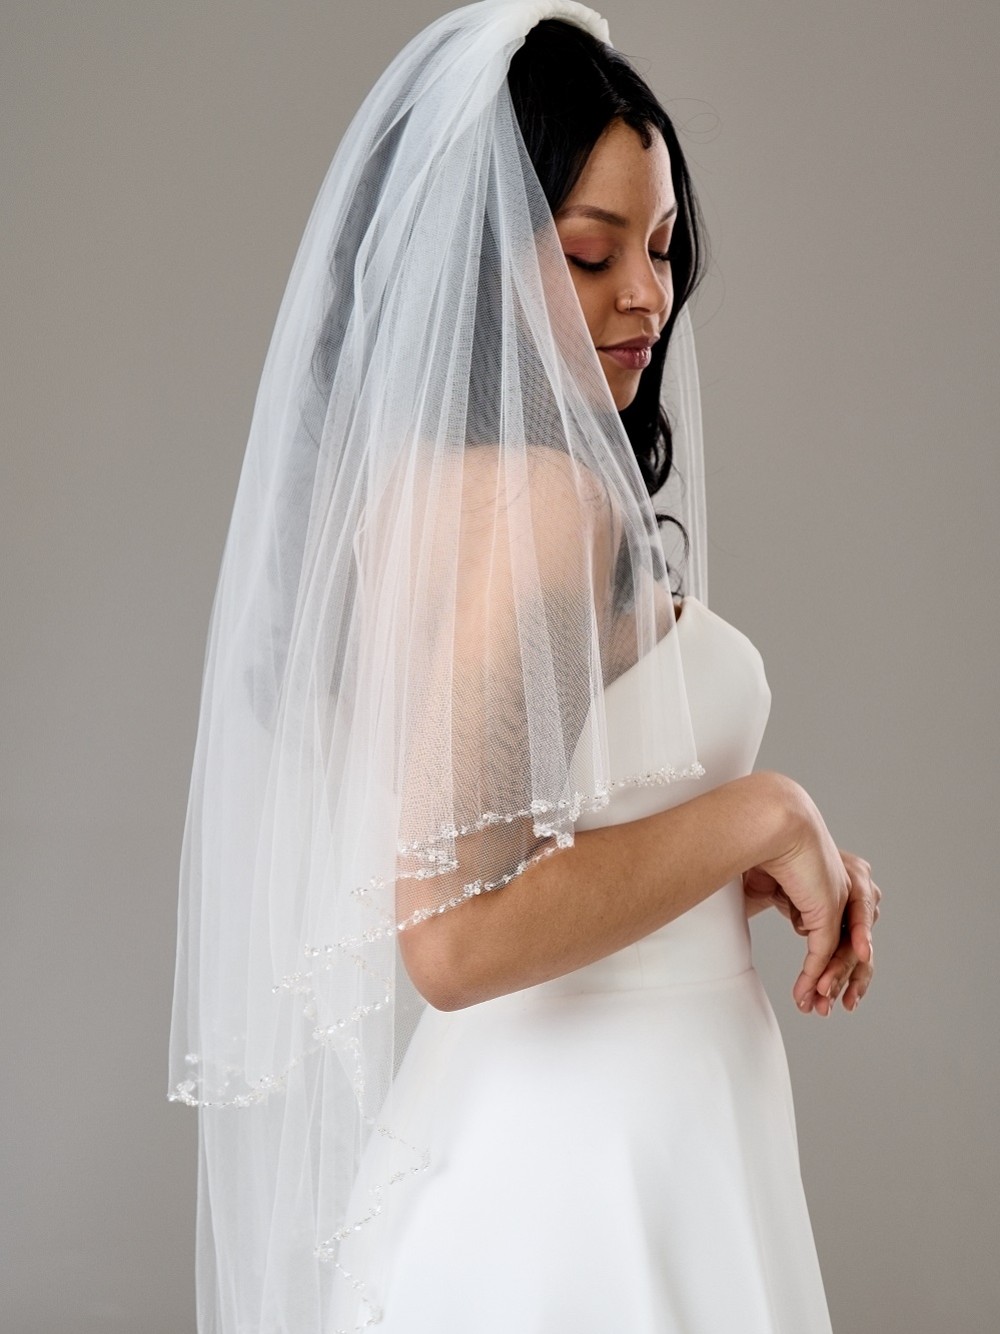 Photograph: Arlington Two Tier Bead and Sequin Edge Bridal Veil